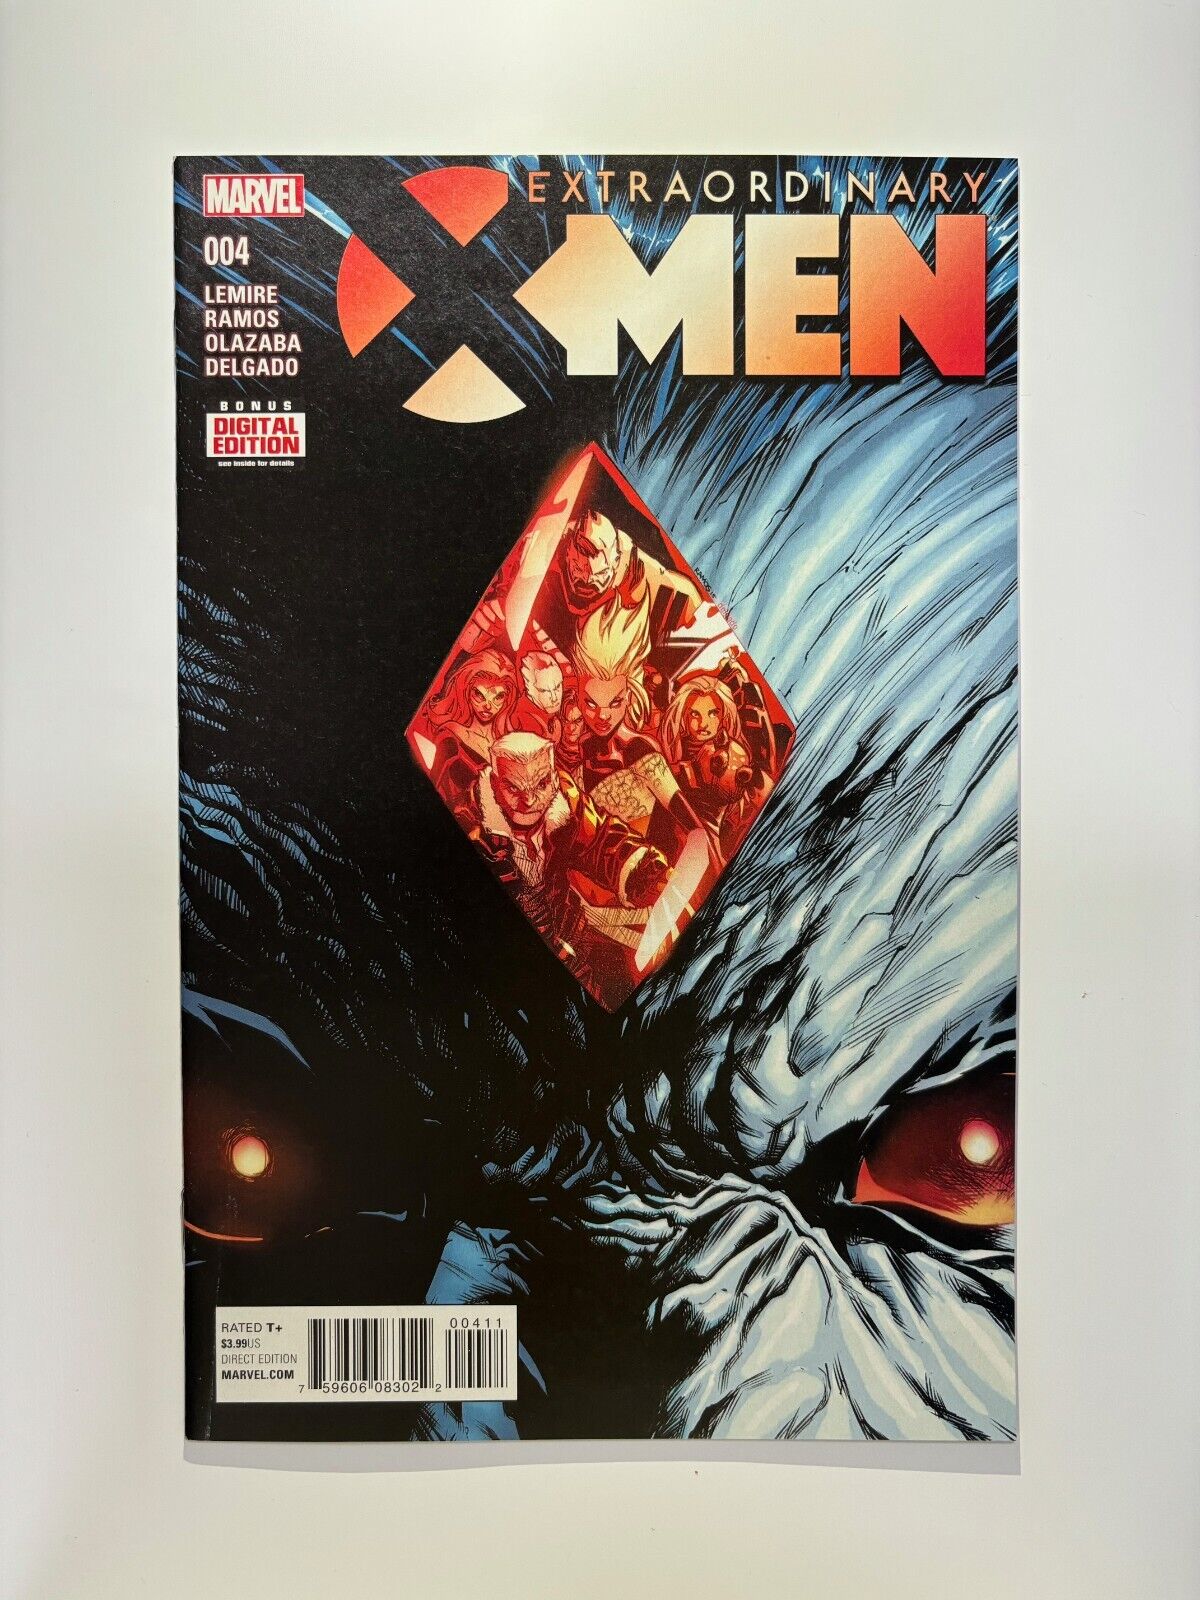 Extraordinary X-Men #4 (Marvel Comics, Lemire, Ramos, Feb 2016) NM